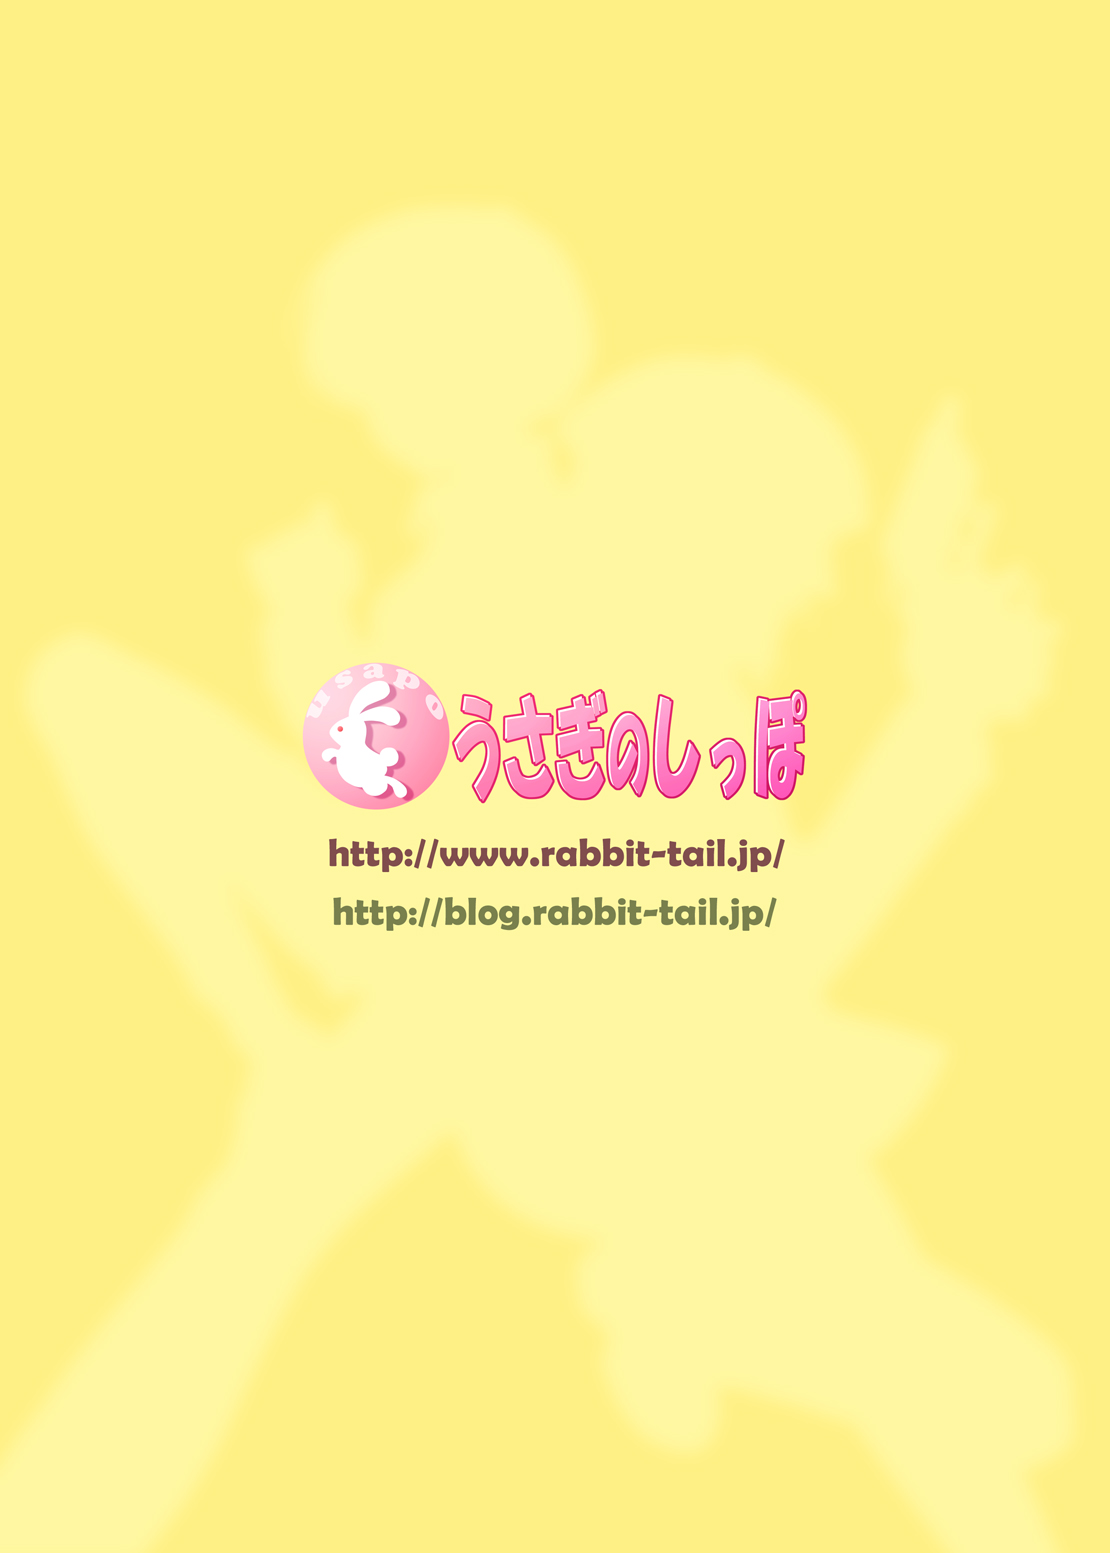 [Usagi no Shippo (Tatsuhide)] EVERYDAY YOUNG LIFE -Boyish Cutie!- (Persona 4) [Digital] [うさぎのしっぽ (龍秀)] EVERYDAY YOUNG LIFE -Boyish Cutie!- (ペルソナ4) [DL版]